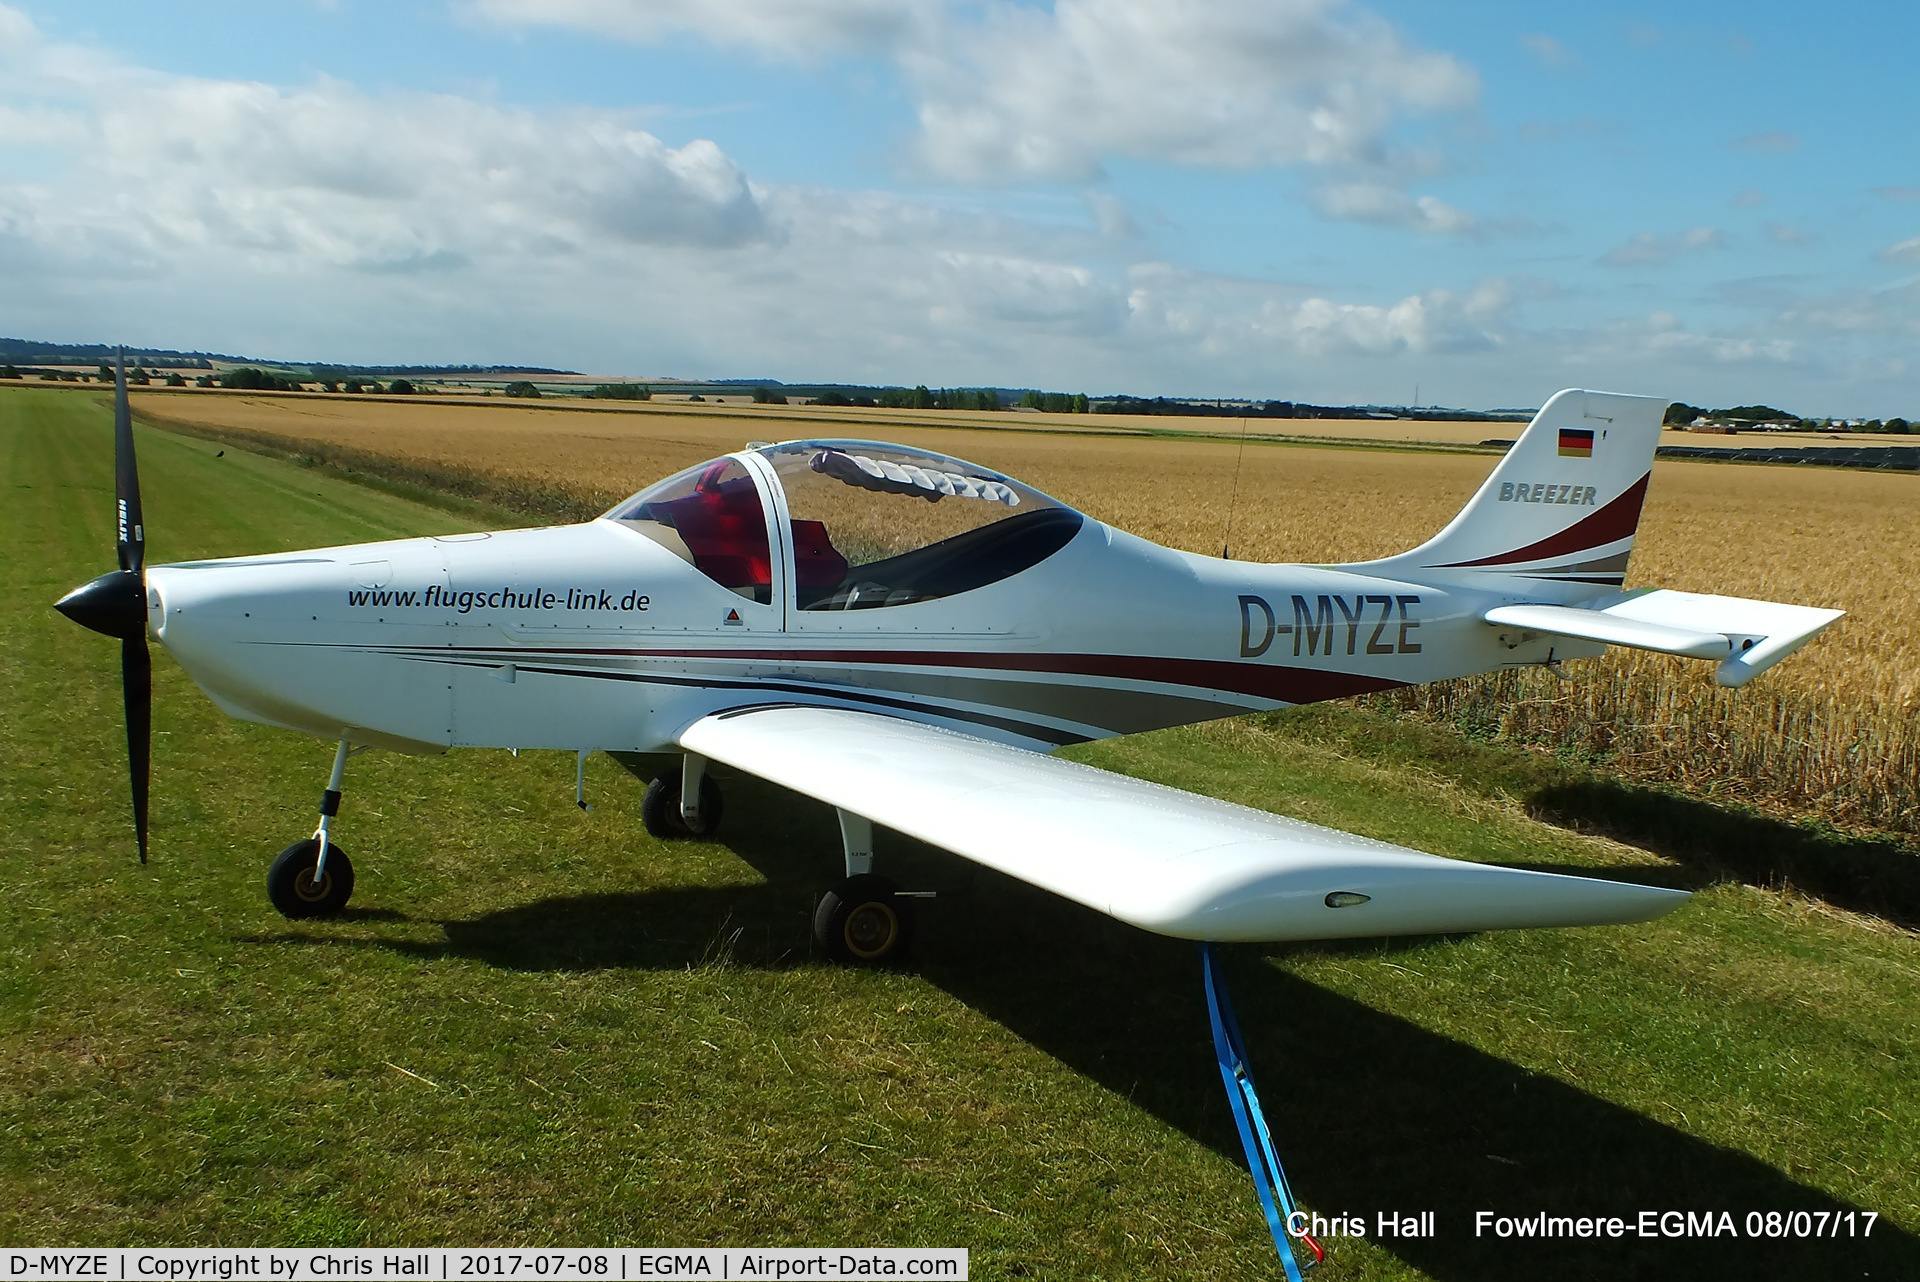 D-MYZE, 2000 Aerostyle Breezer C/N Not found D-MYZE, at Fowlmere